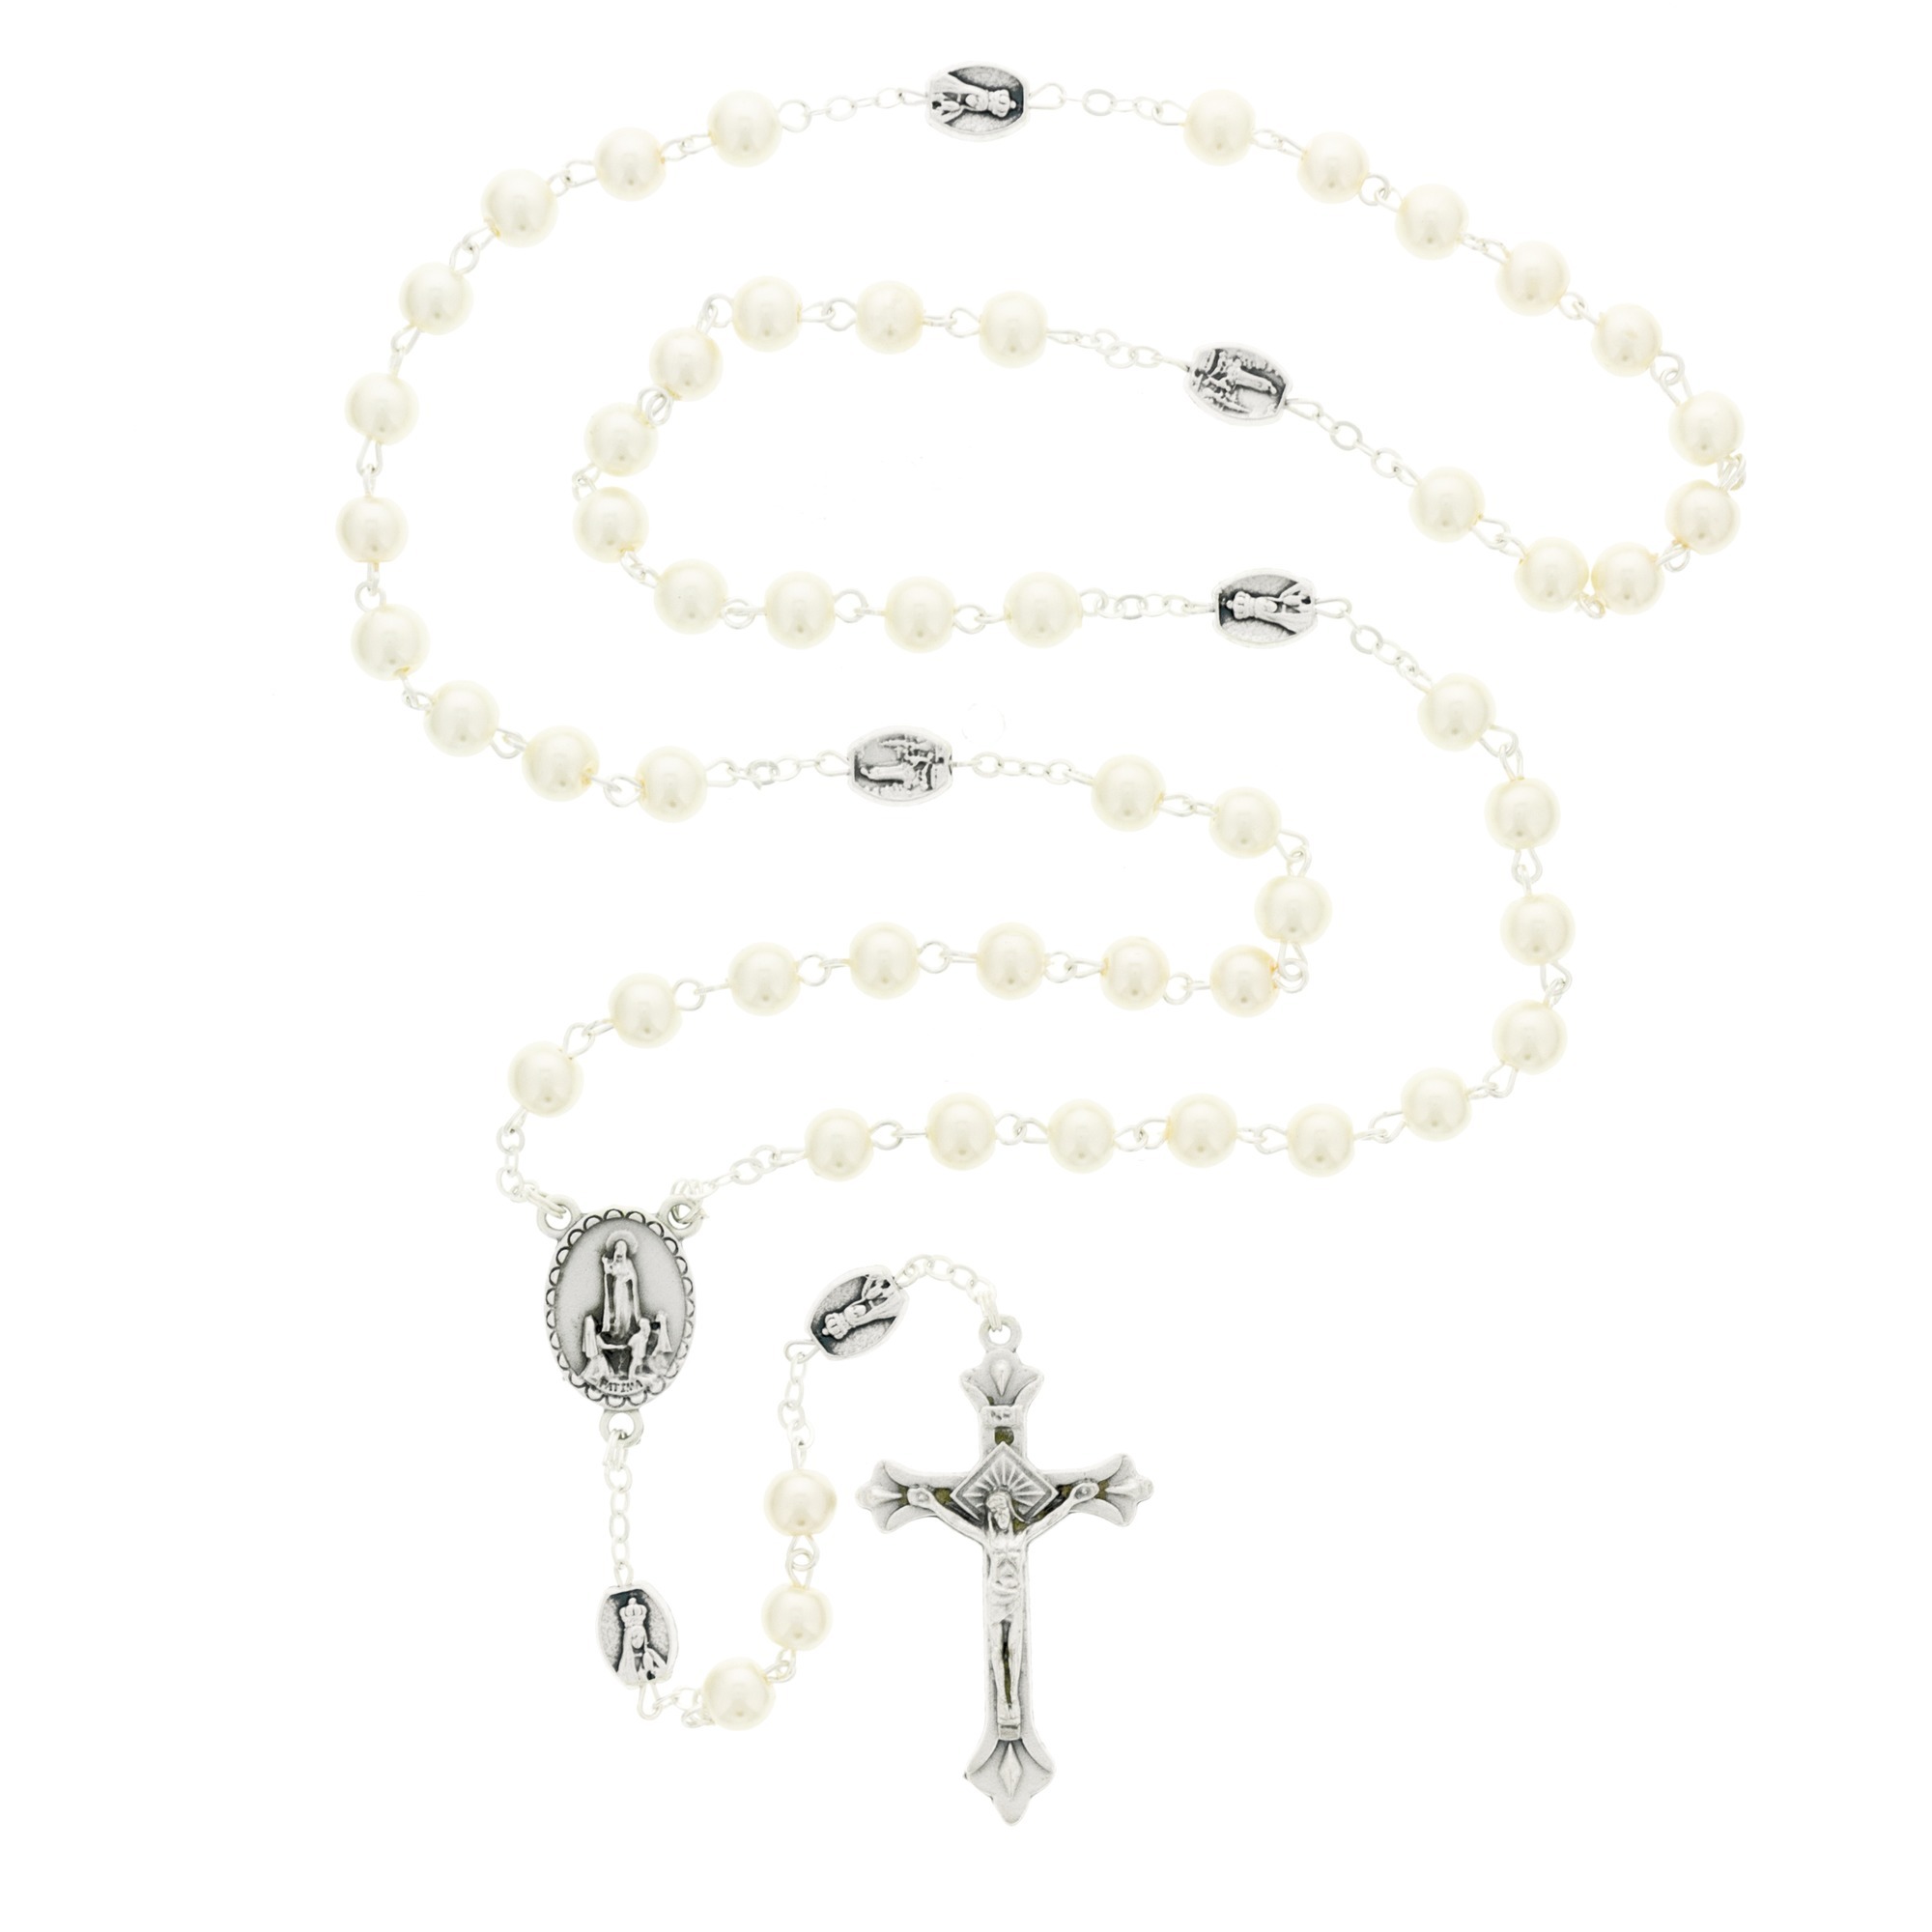 Our Lady of Fatima Cream Beaded Rosary | The Catholic Company®